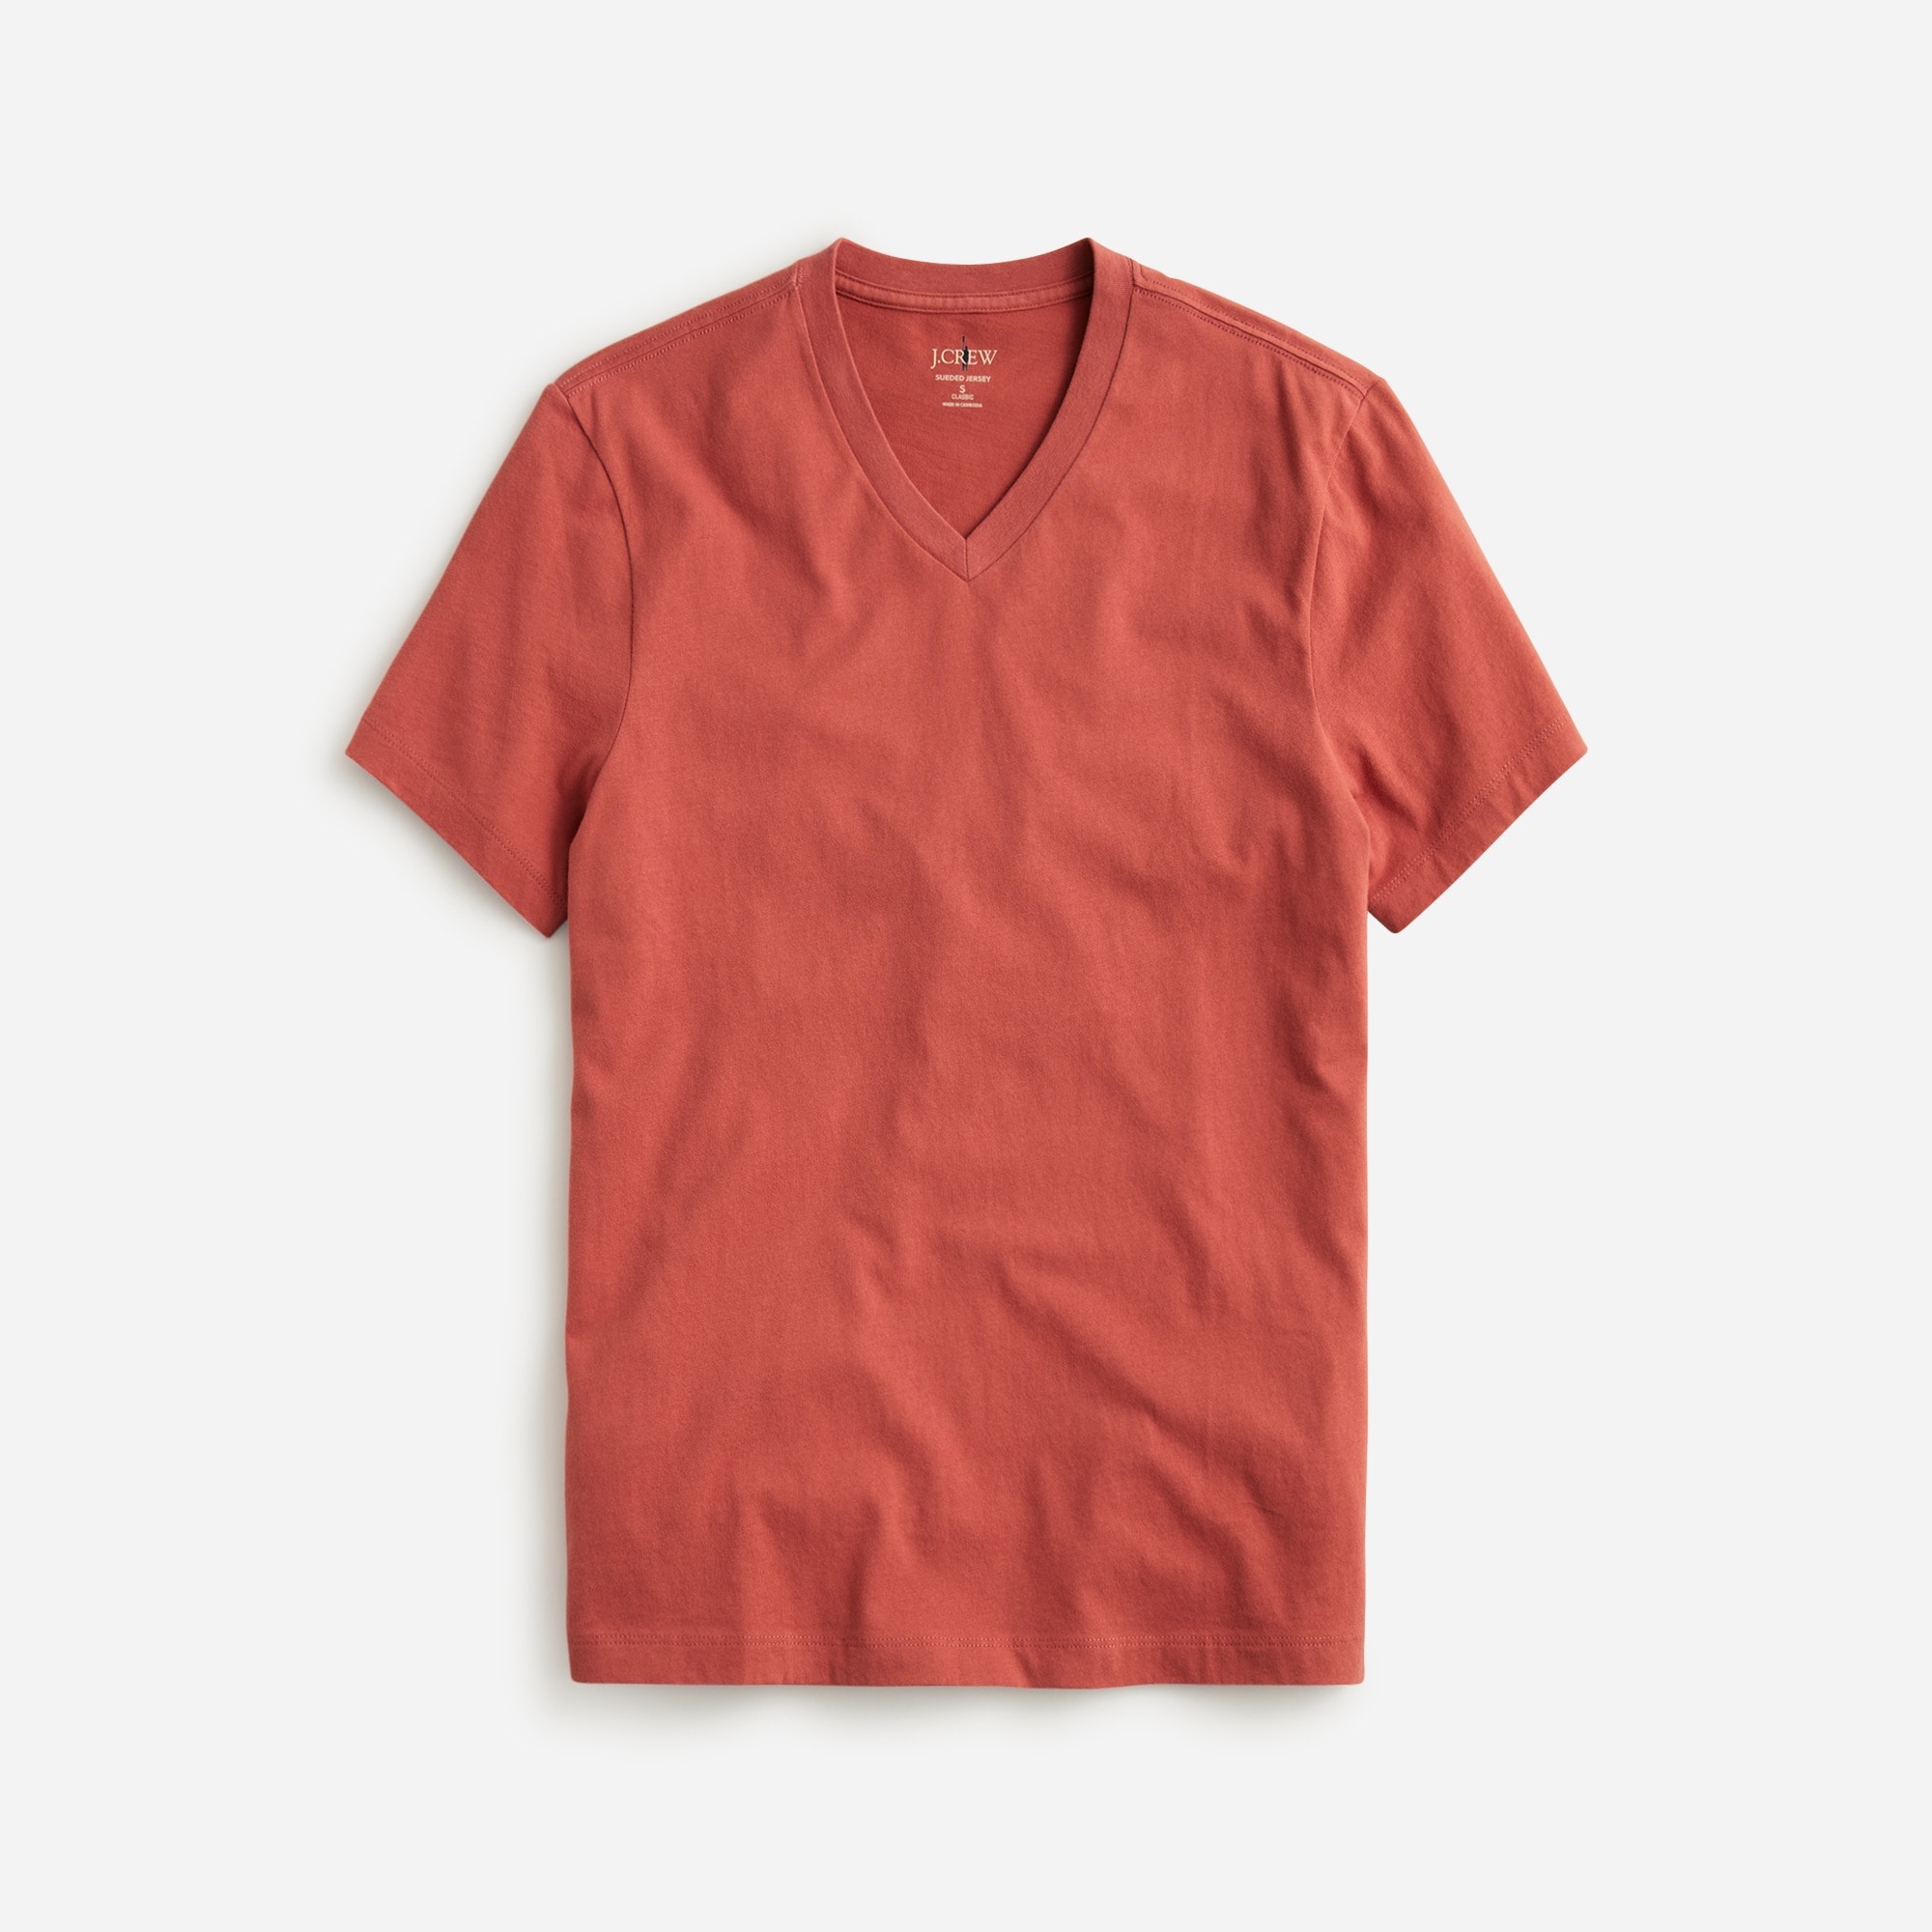  Slim sueded cotton V-neck T-shirt